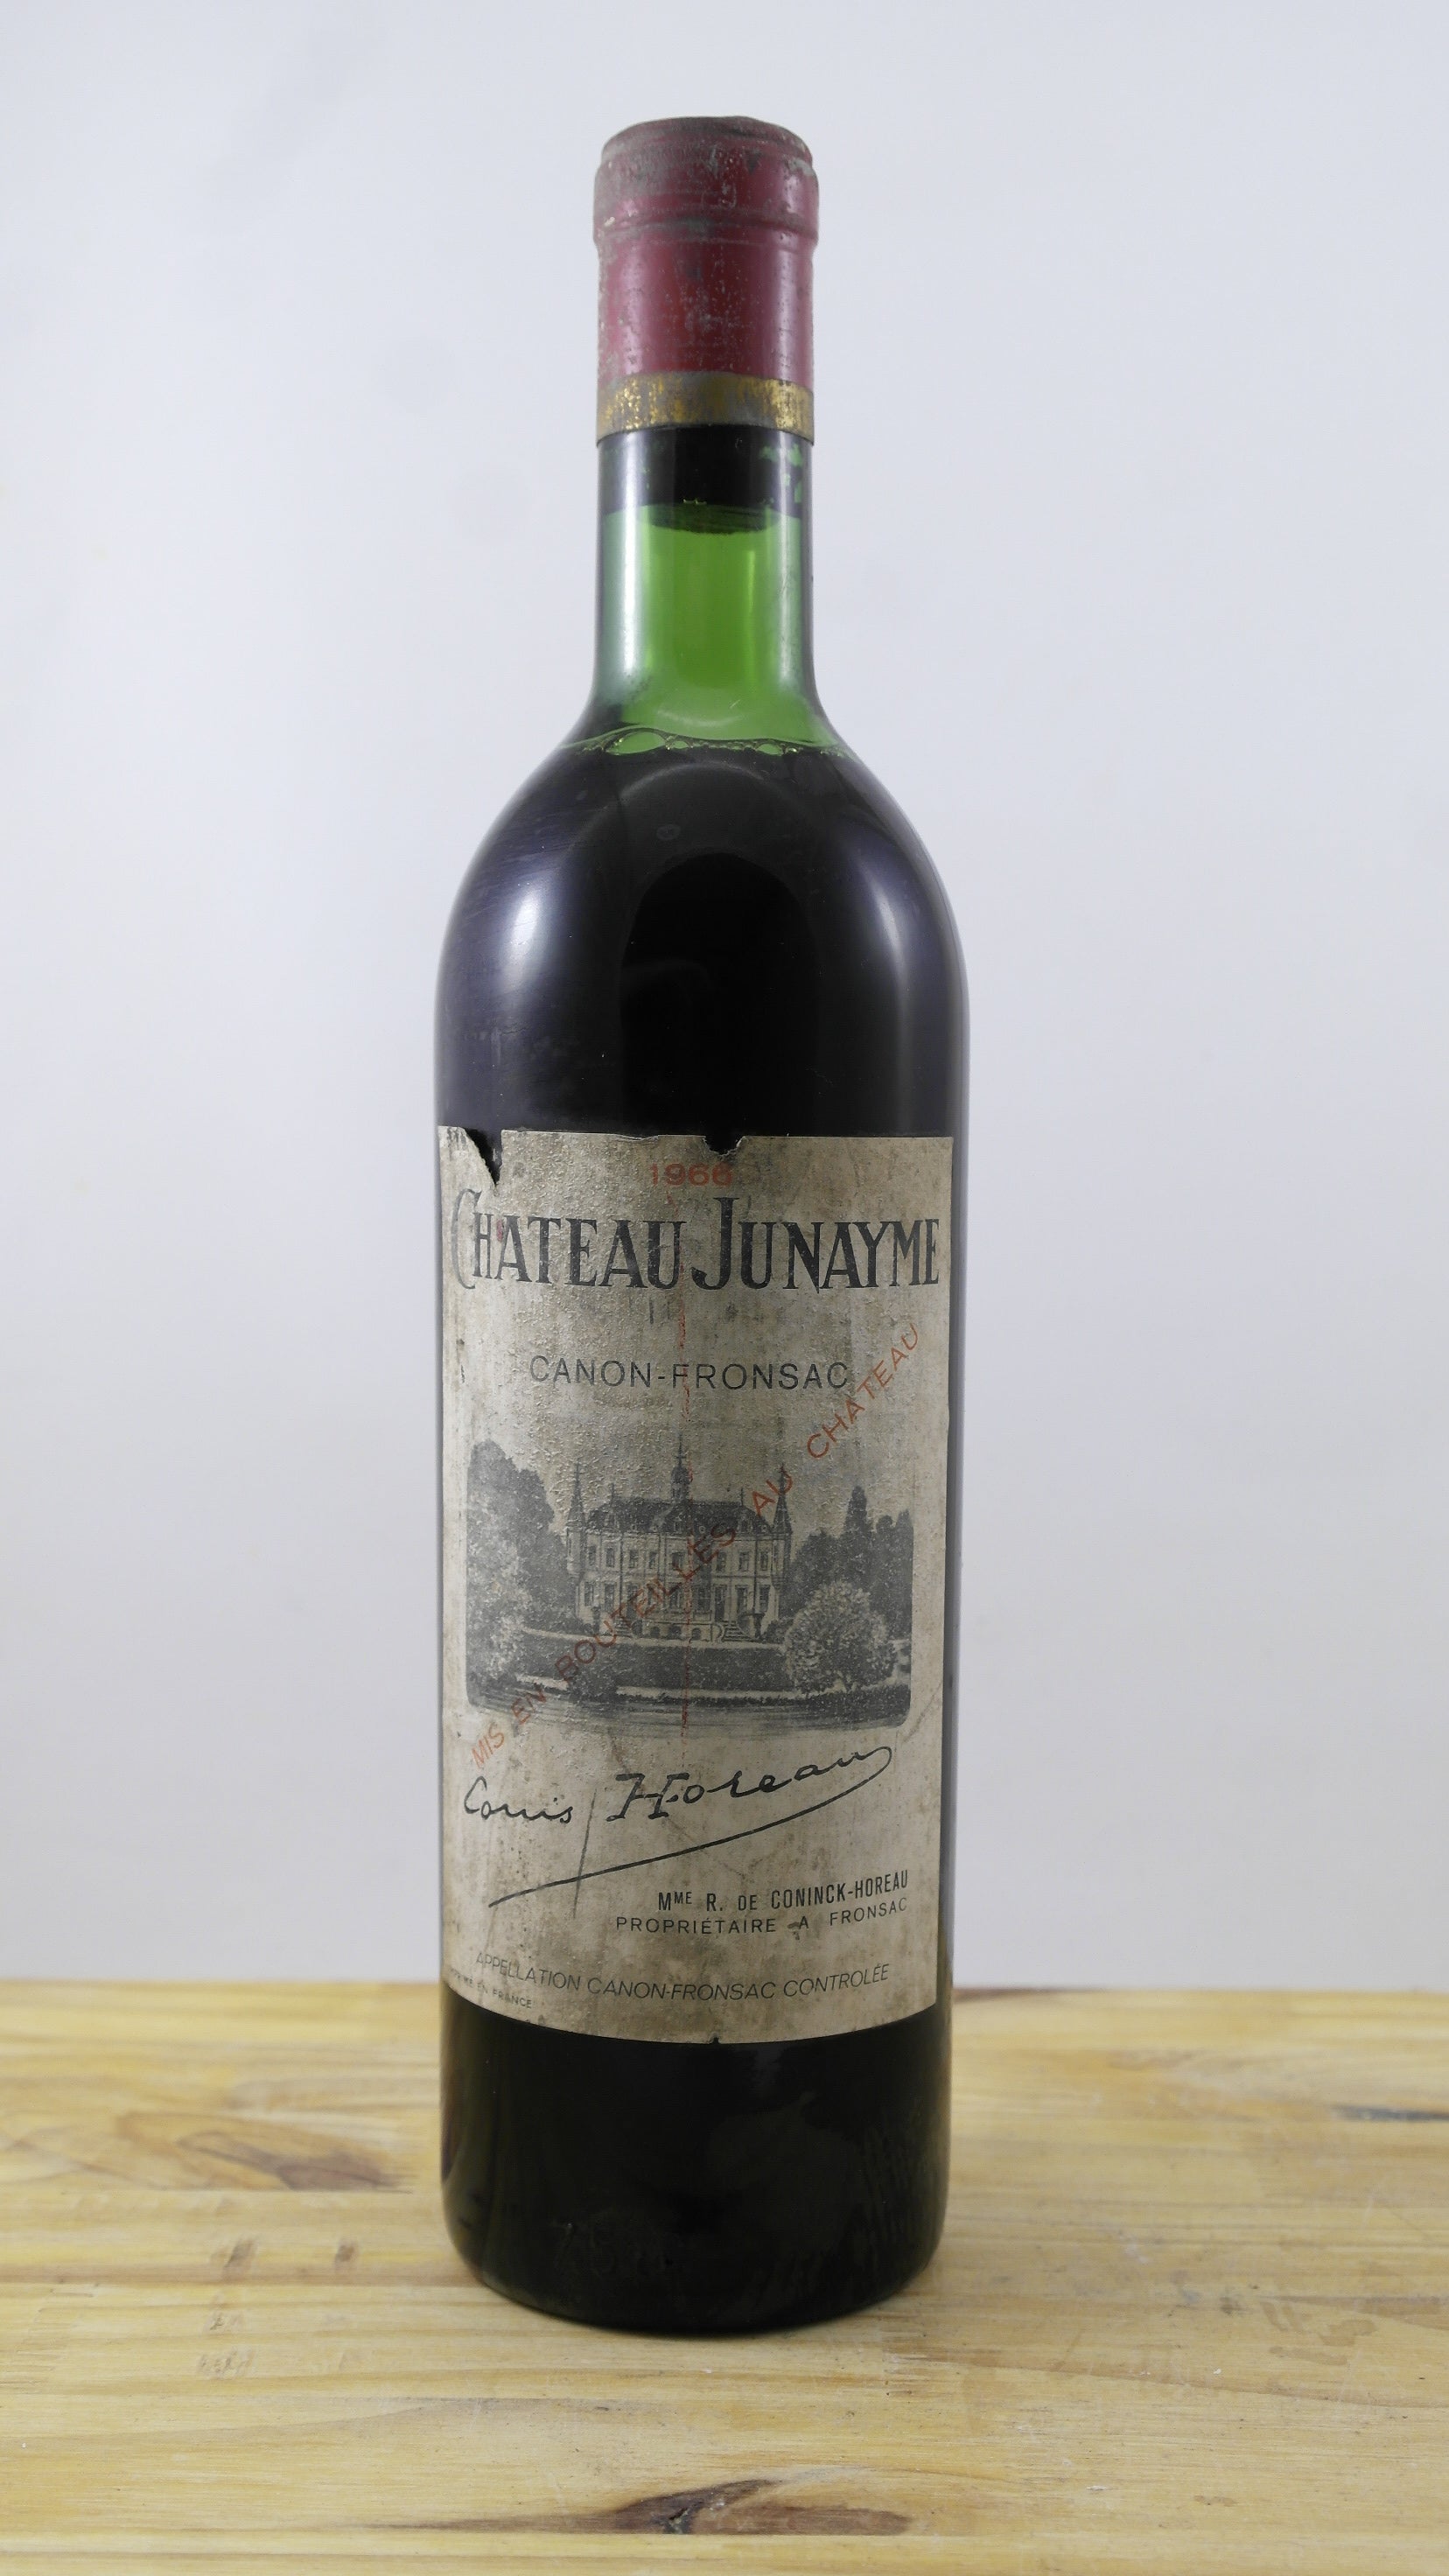 Château Junayme NB Vin 1966